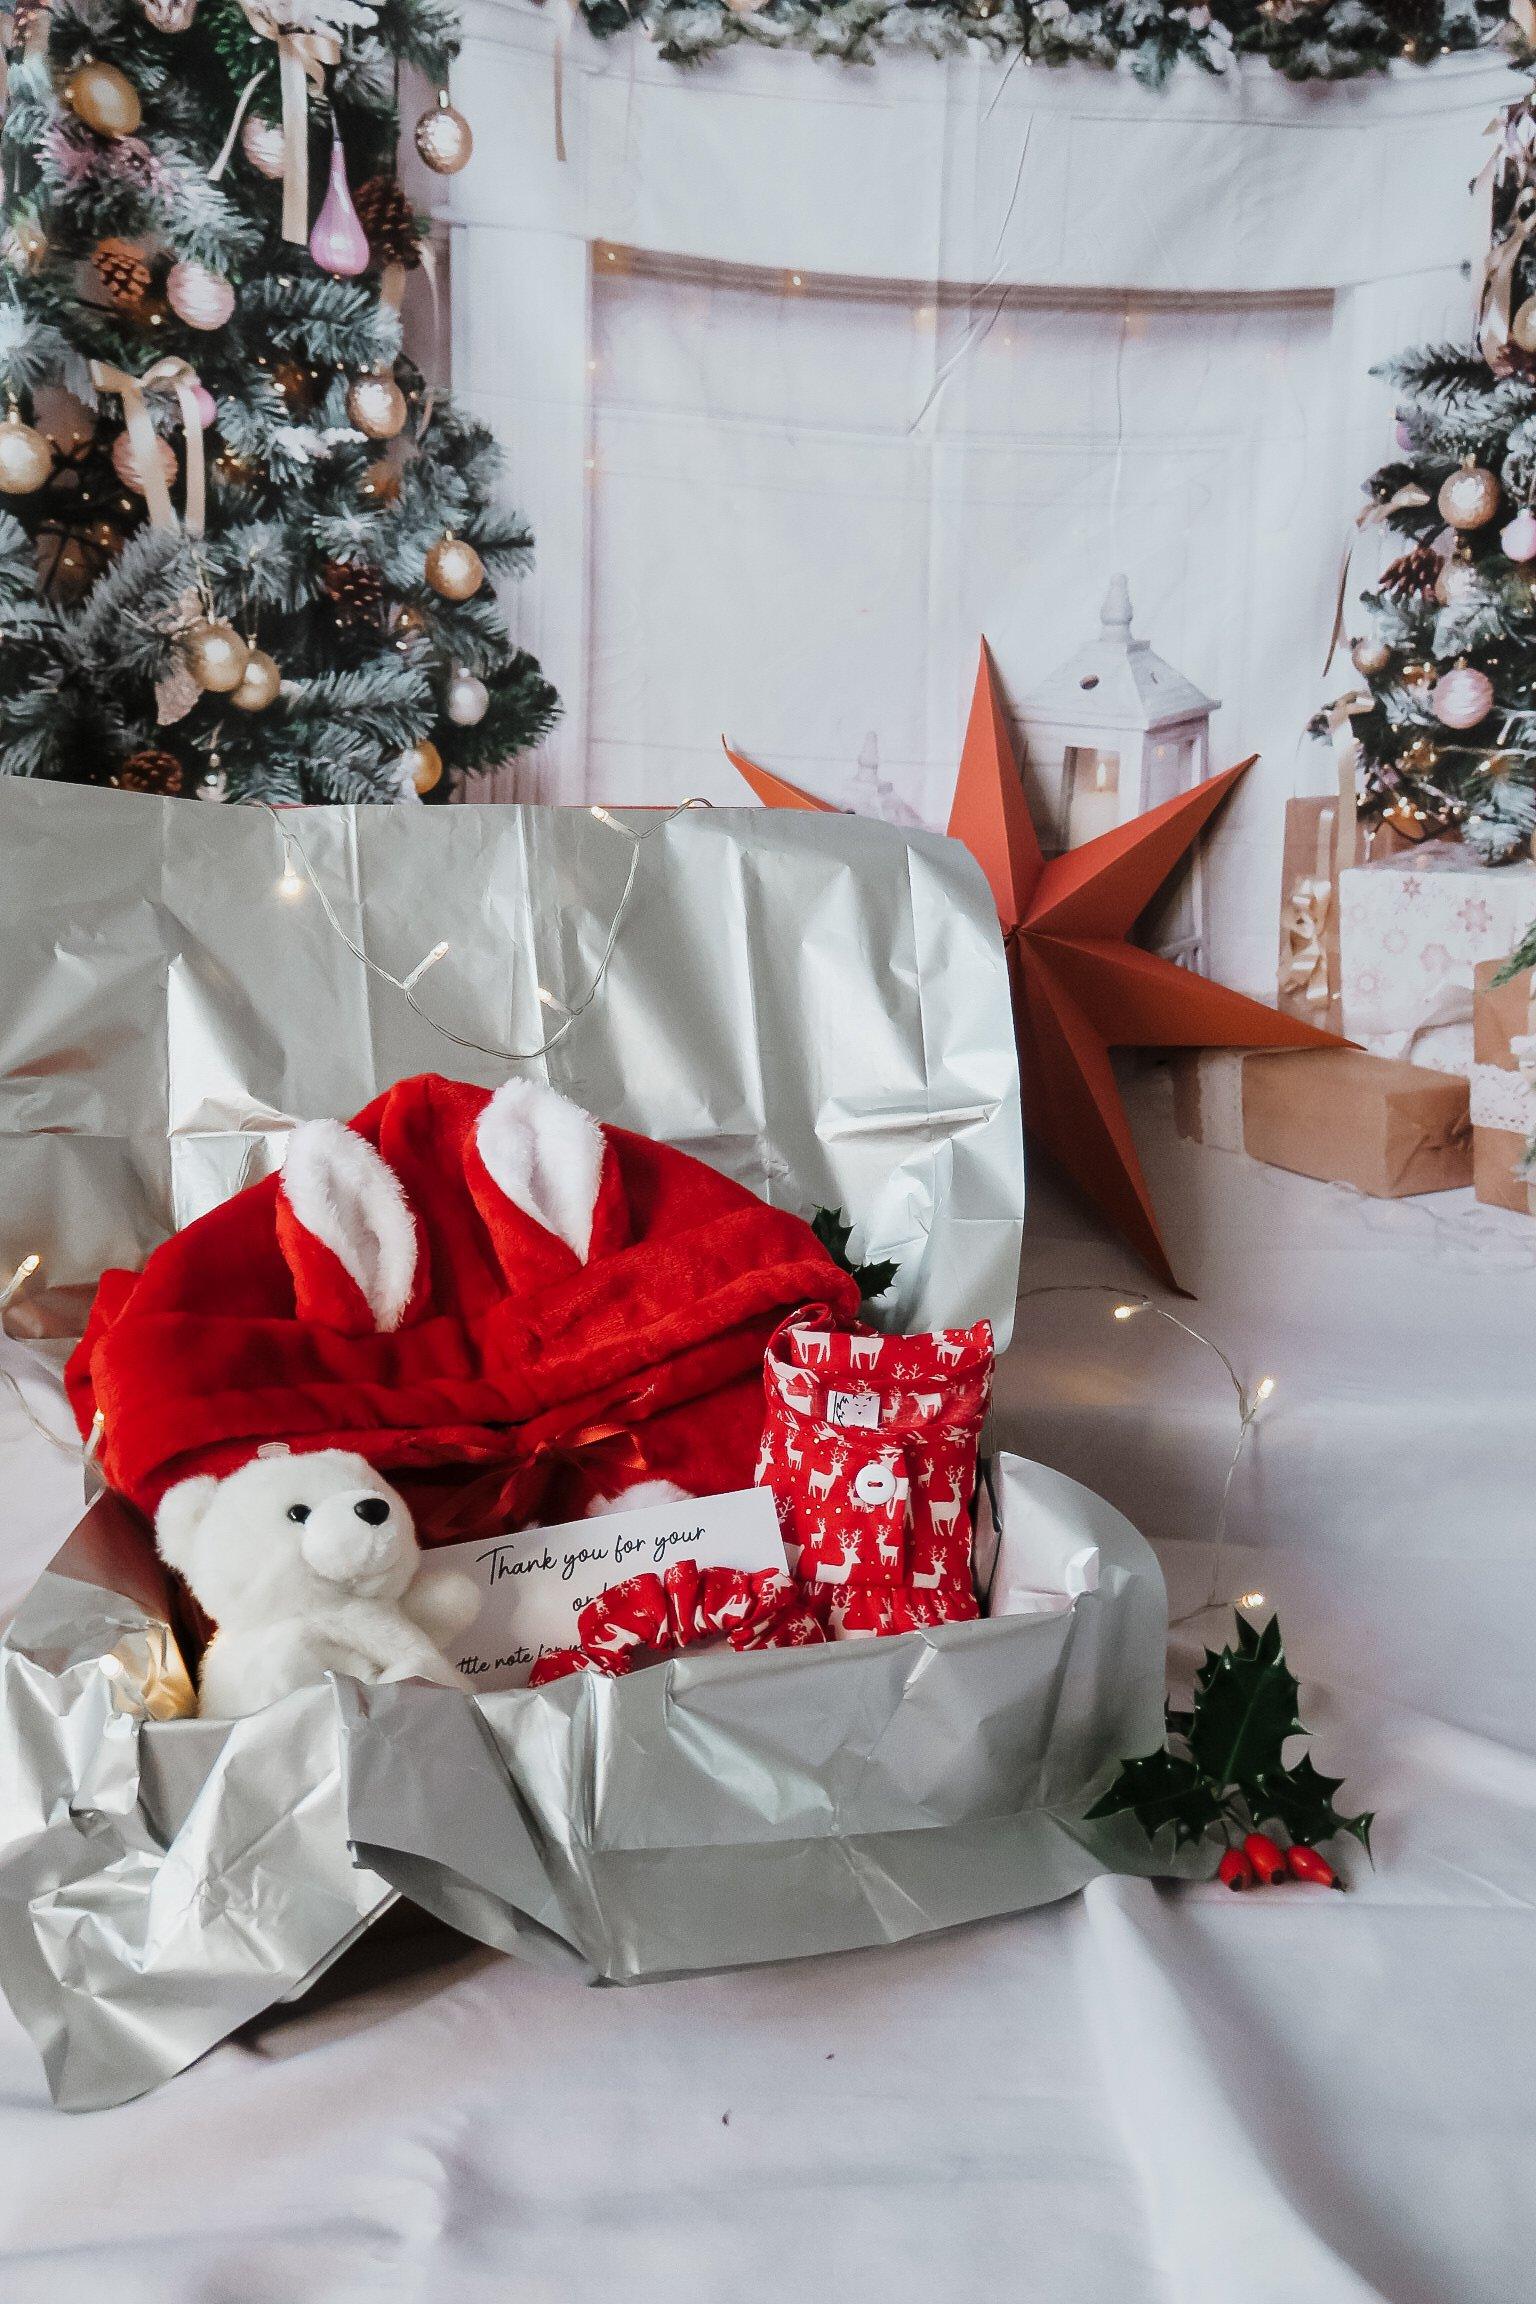 Christmas Red Fox Snuggle Hoodie and Reindeer Nightie Gift Box With Polar Bear Teddy